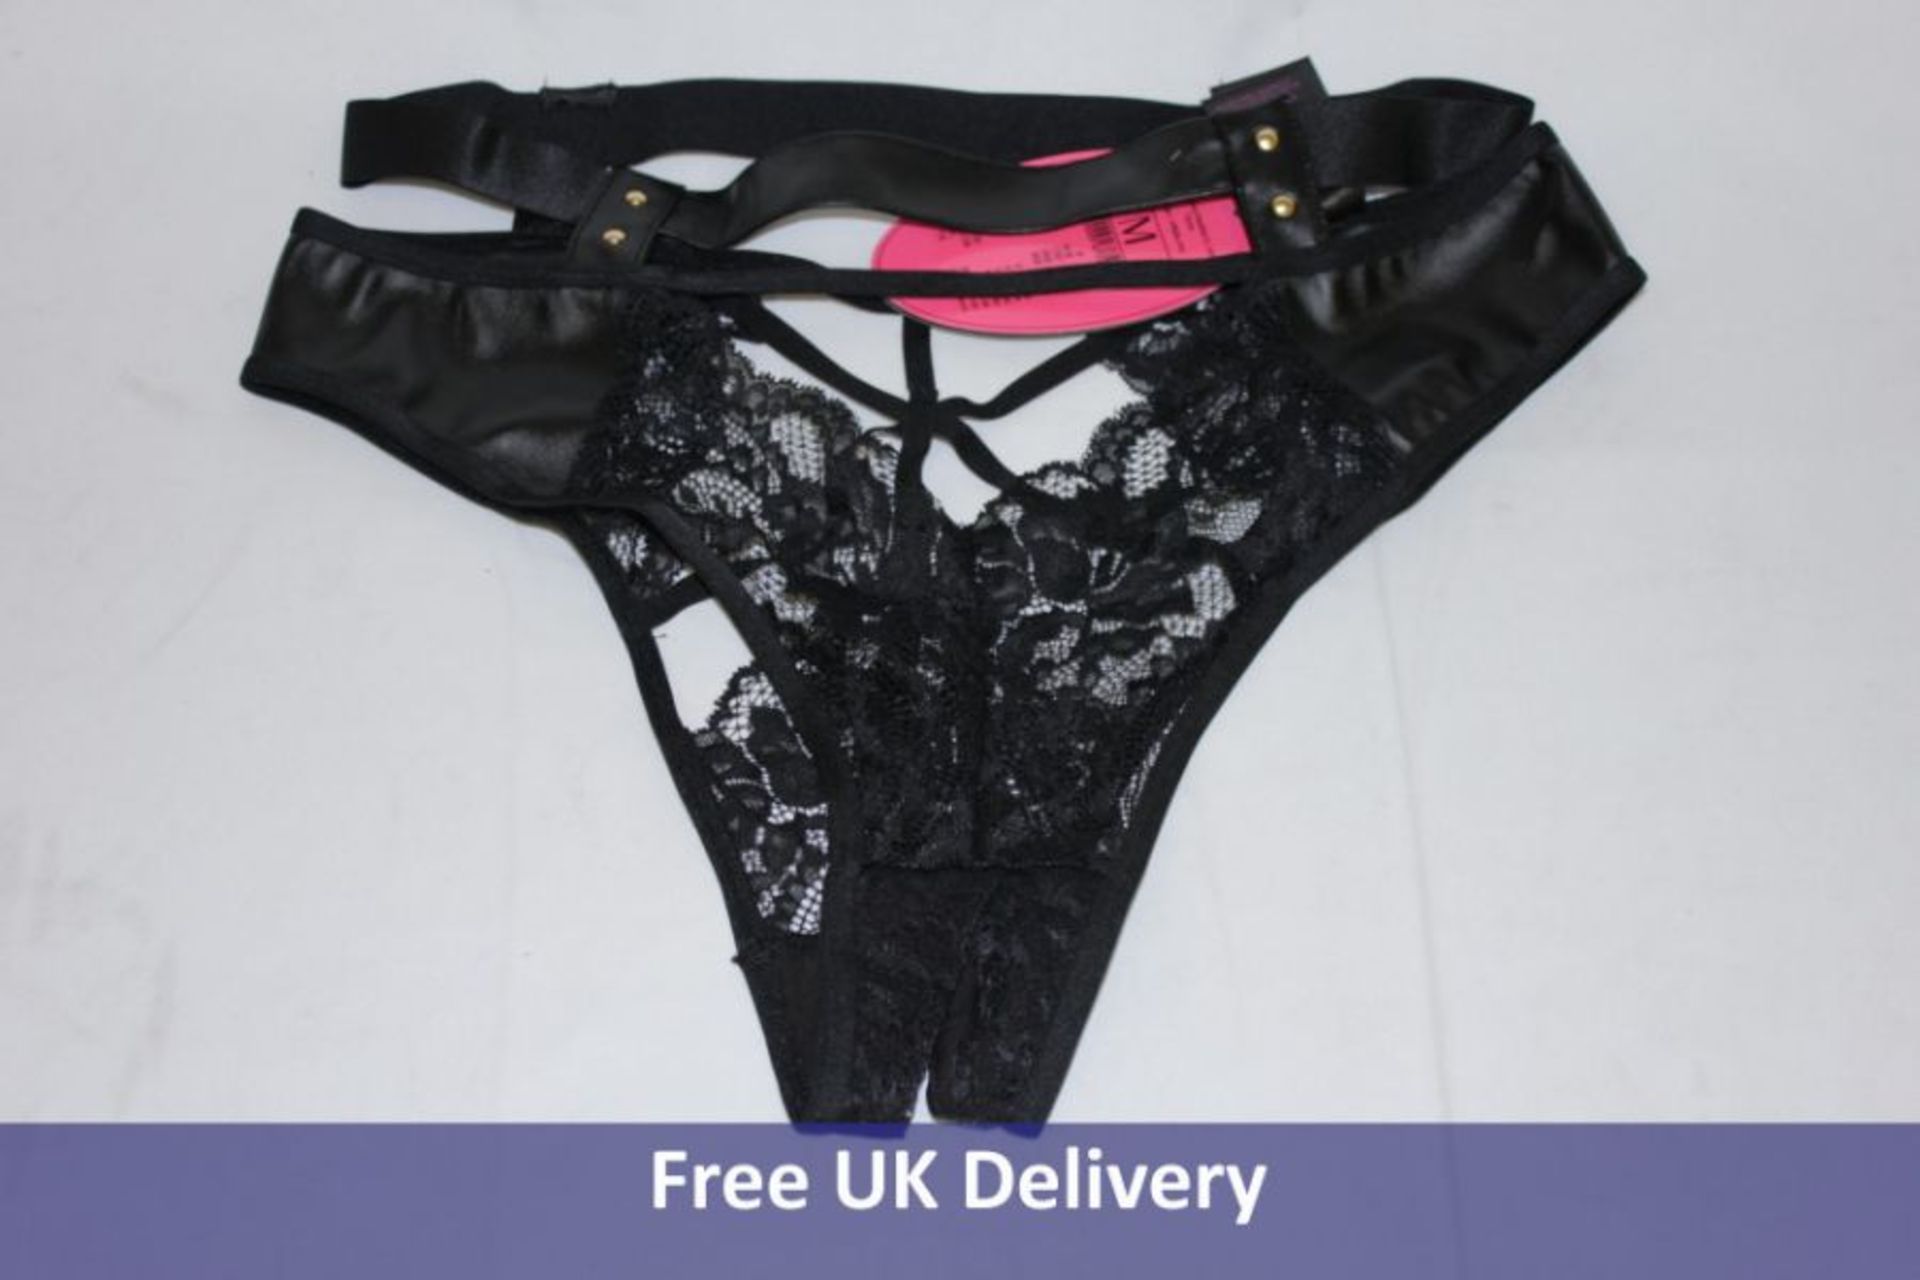 Hunkemoller Womens Underwear to include Bras, Thongs, Suspenders, Stockings, approximately 14 items,